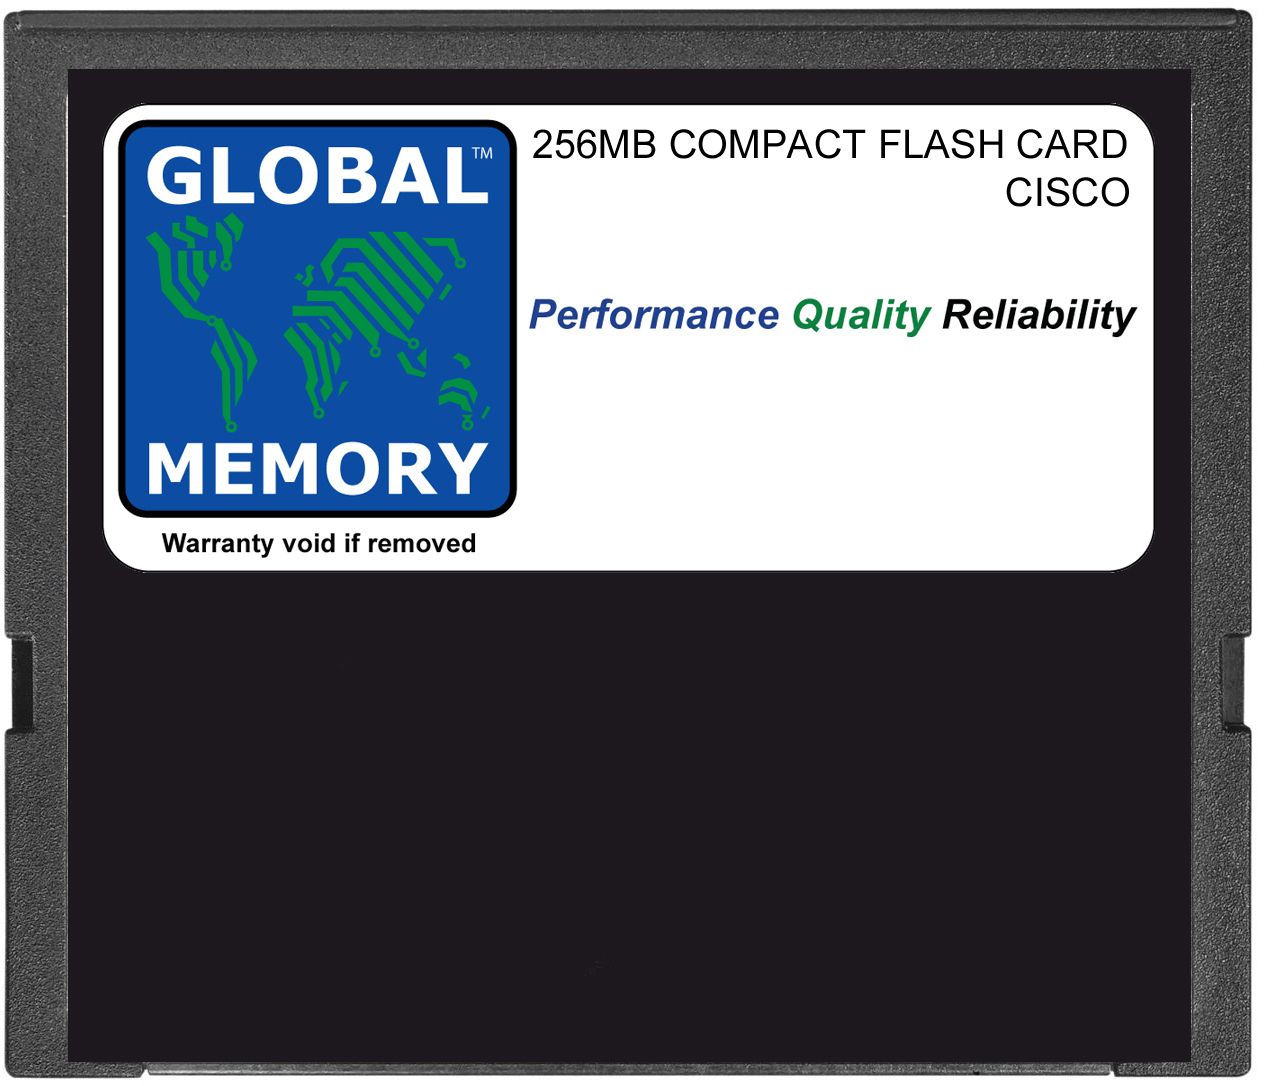 256MB COMPACT FLASH CARD MEMORY FOR CISCO ASA 5500 FIREWALL (ASA5500-CF-256MB)